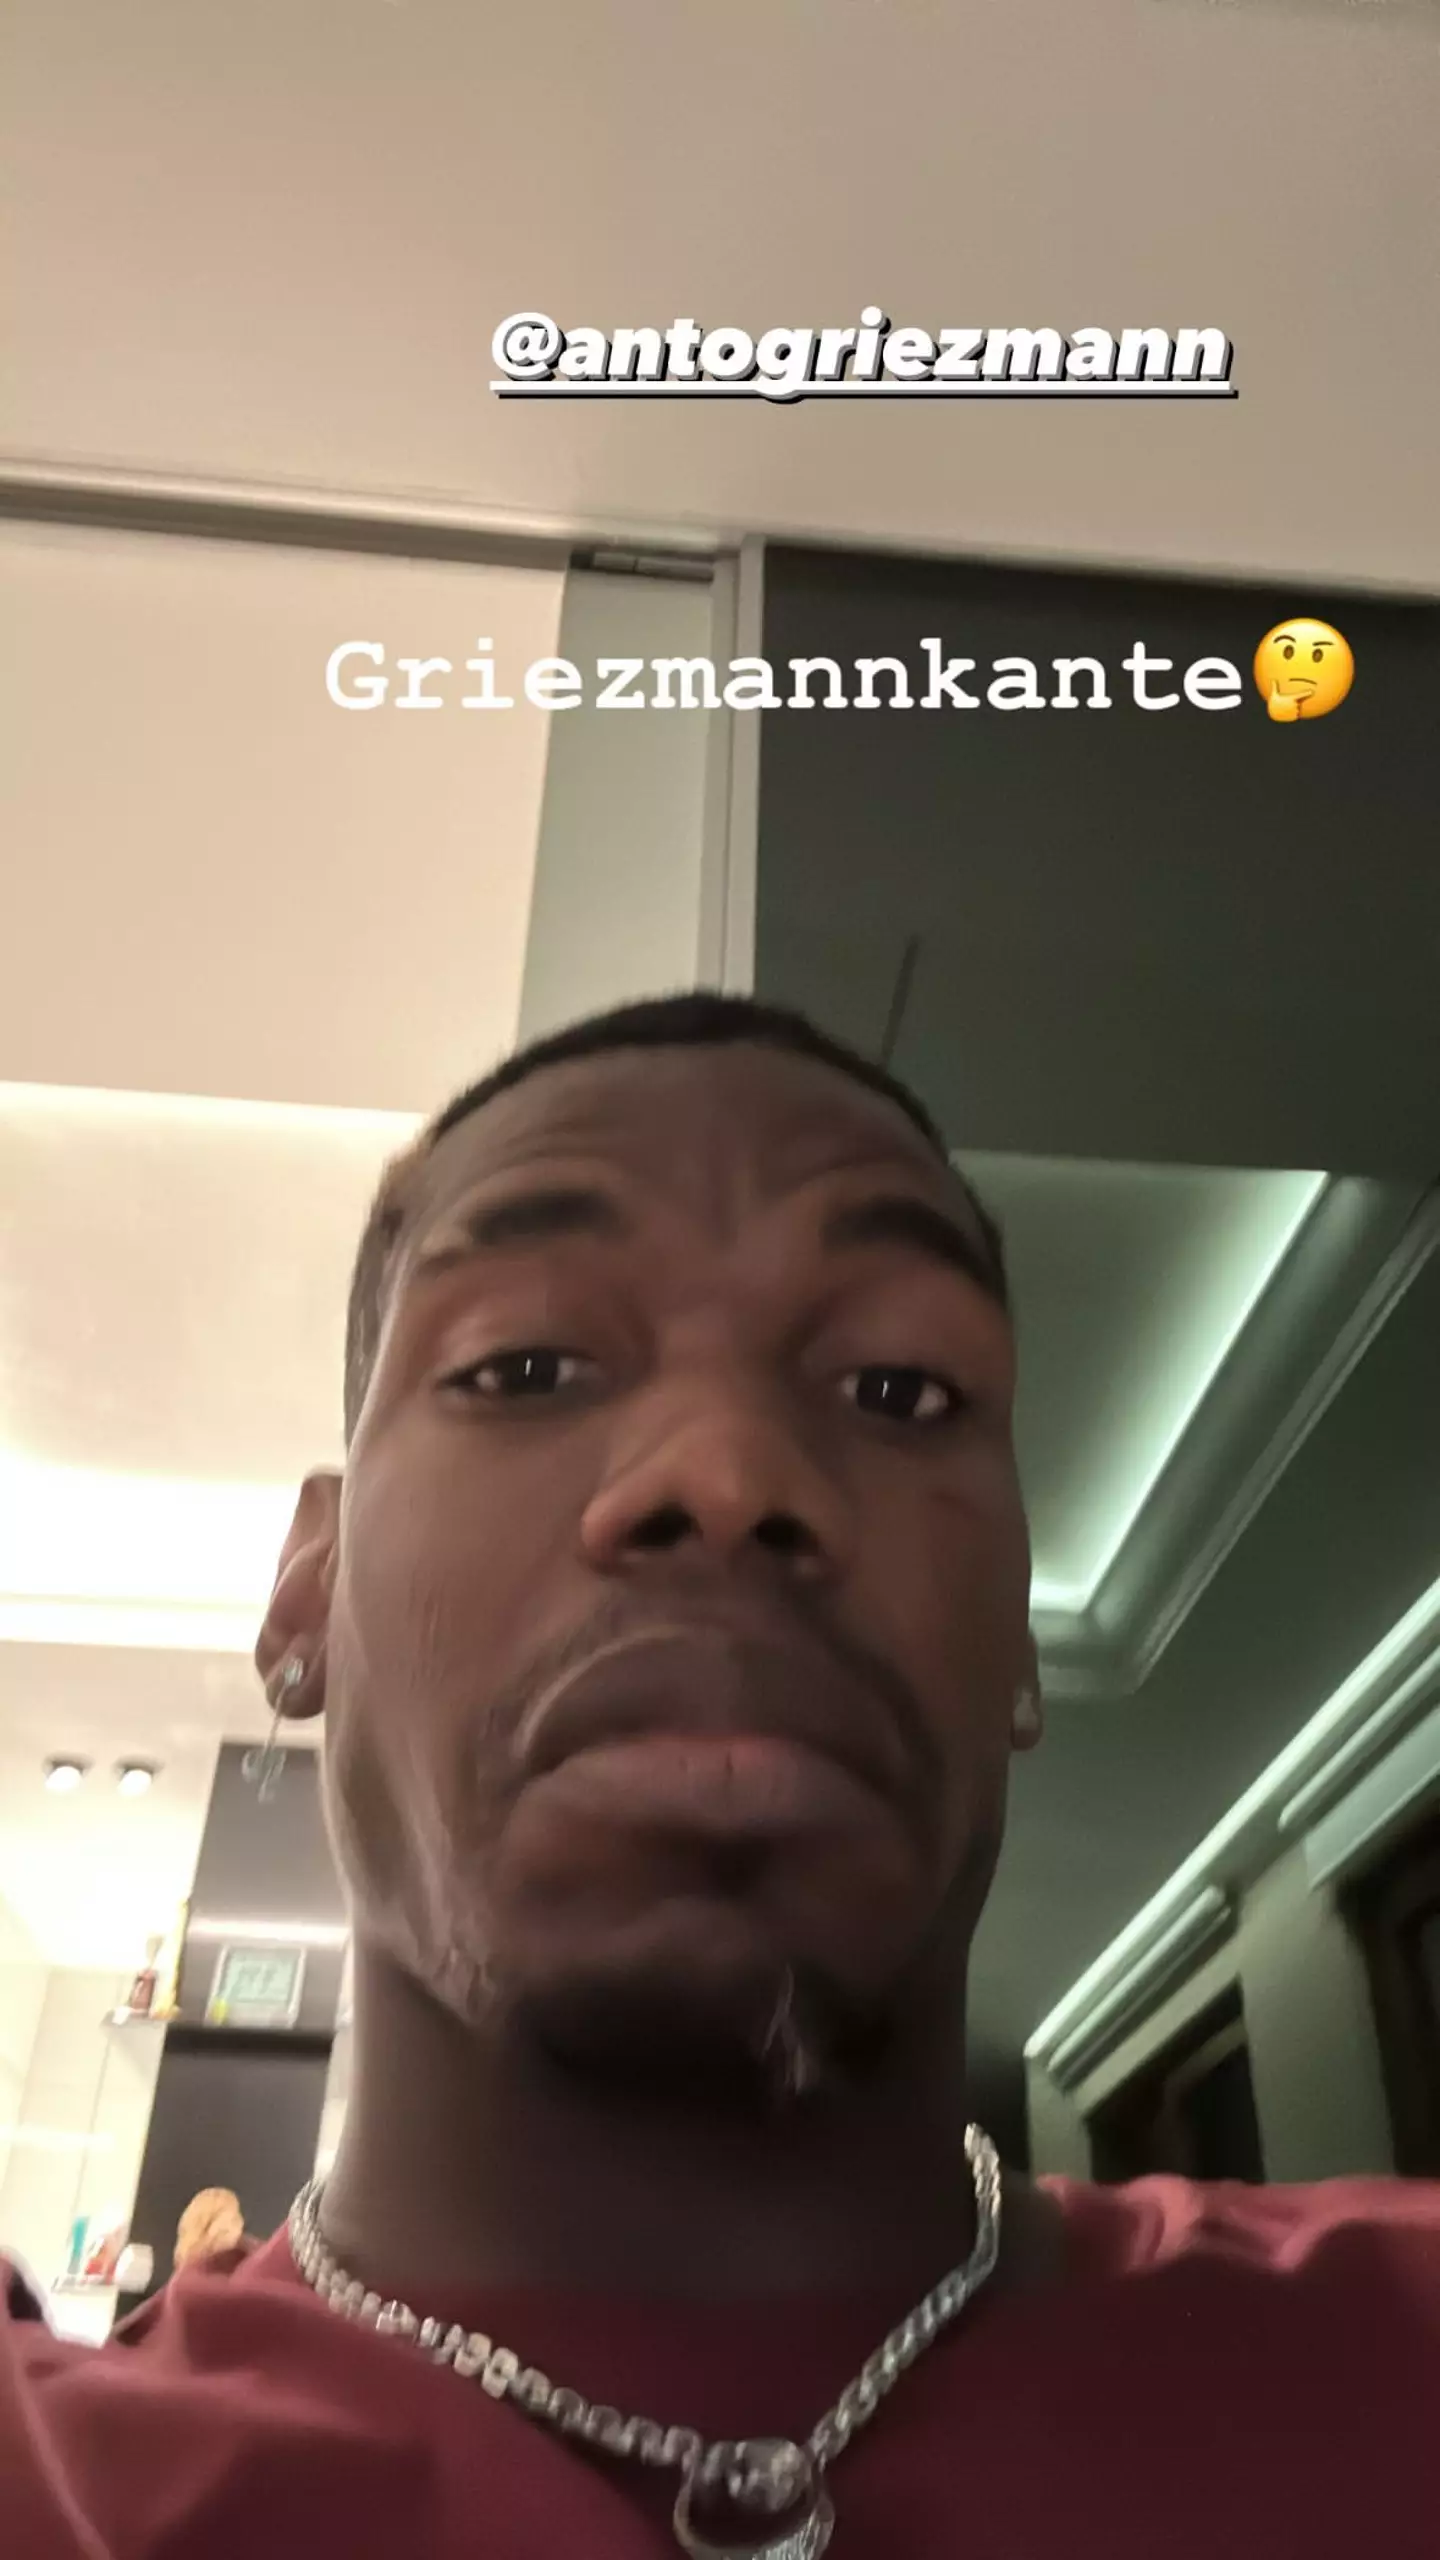 Paul Pogba called France teammate Antoine Griezmann ‘GriezmannKante’ on his Instagram Stories.